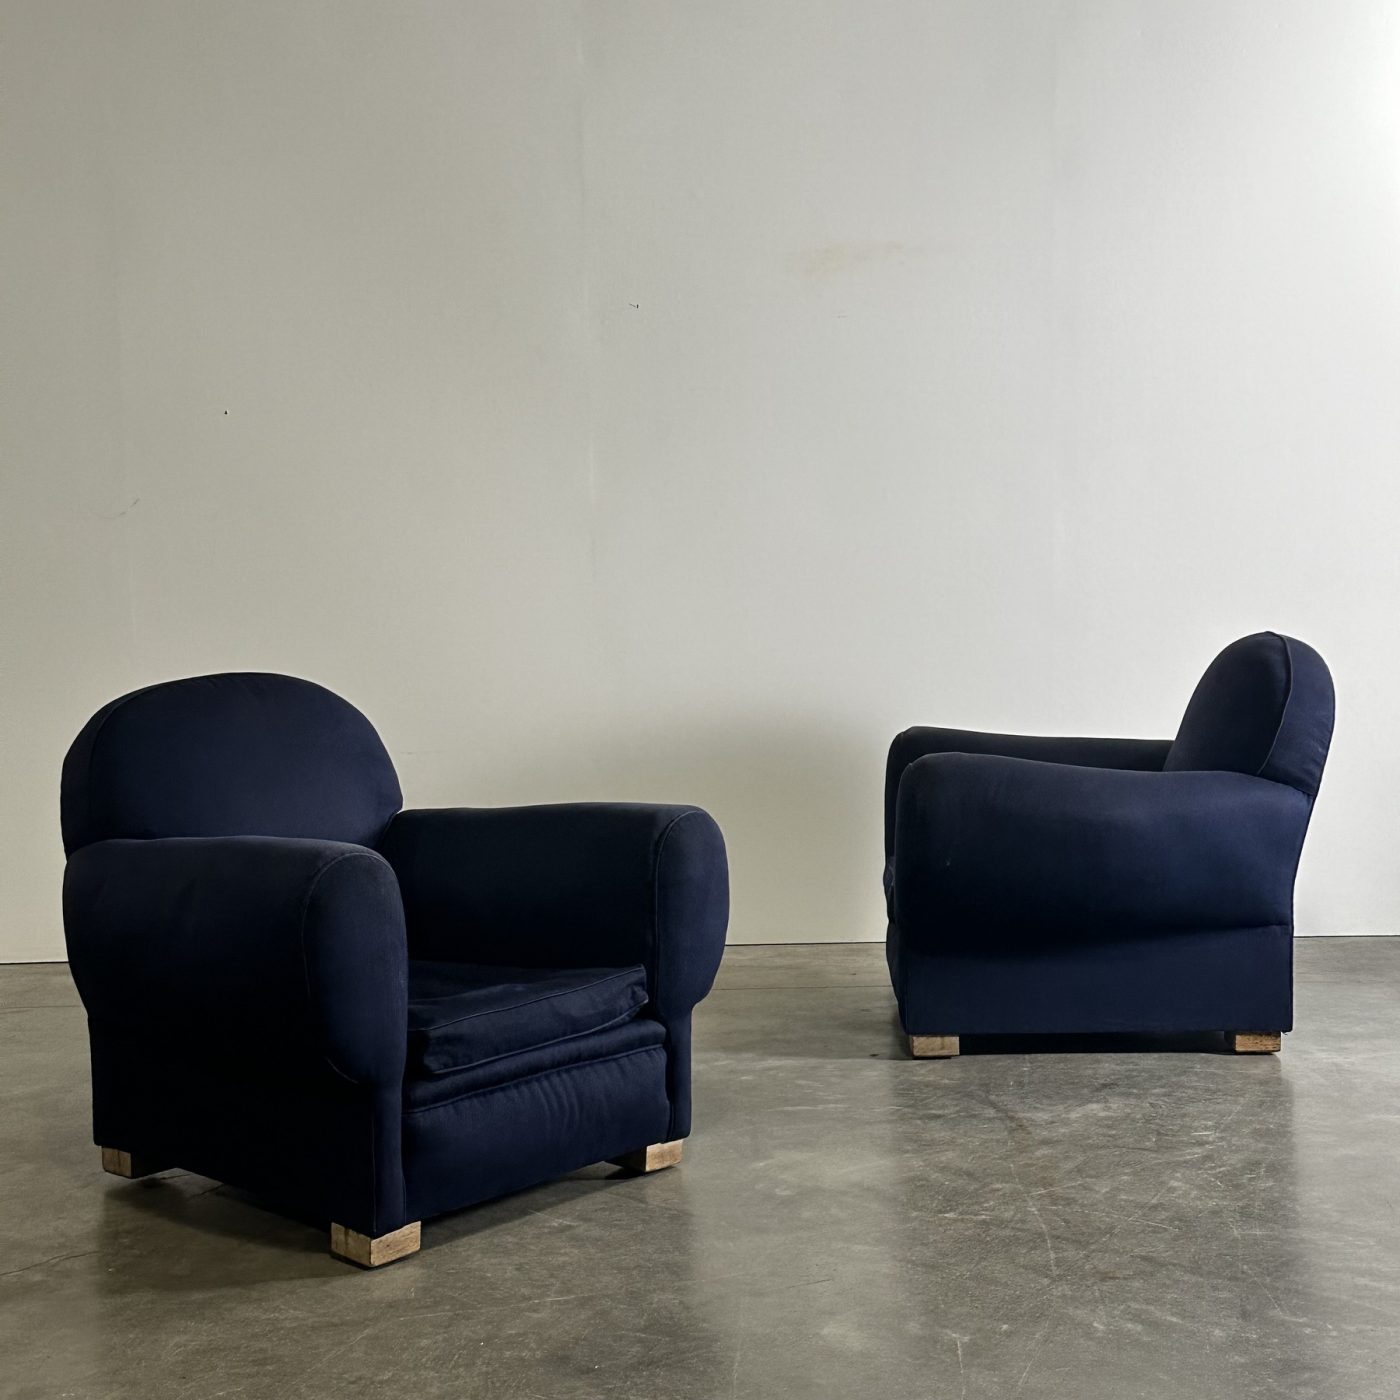 objet-vagabond-club-chairs0005